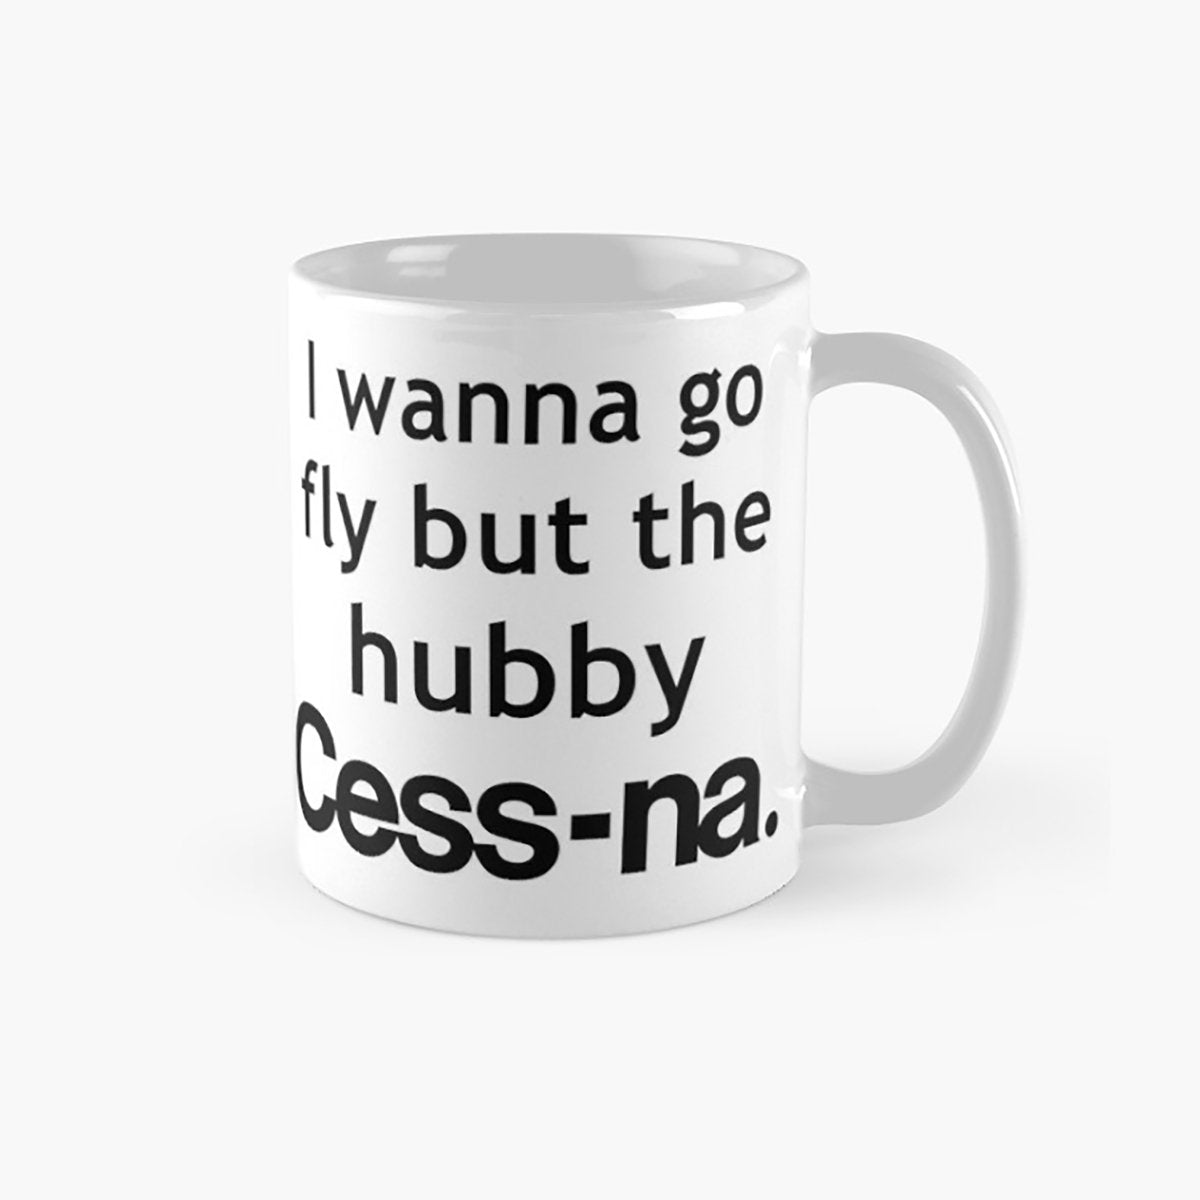 Hubby Cess-Na Mug